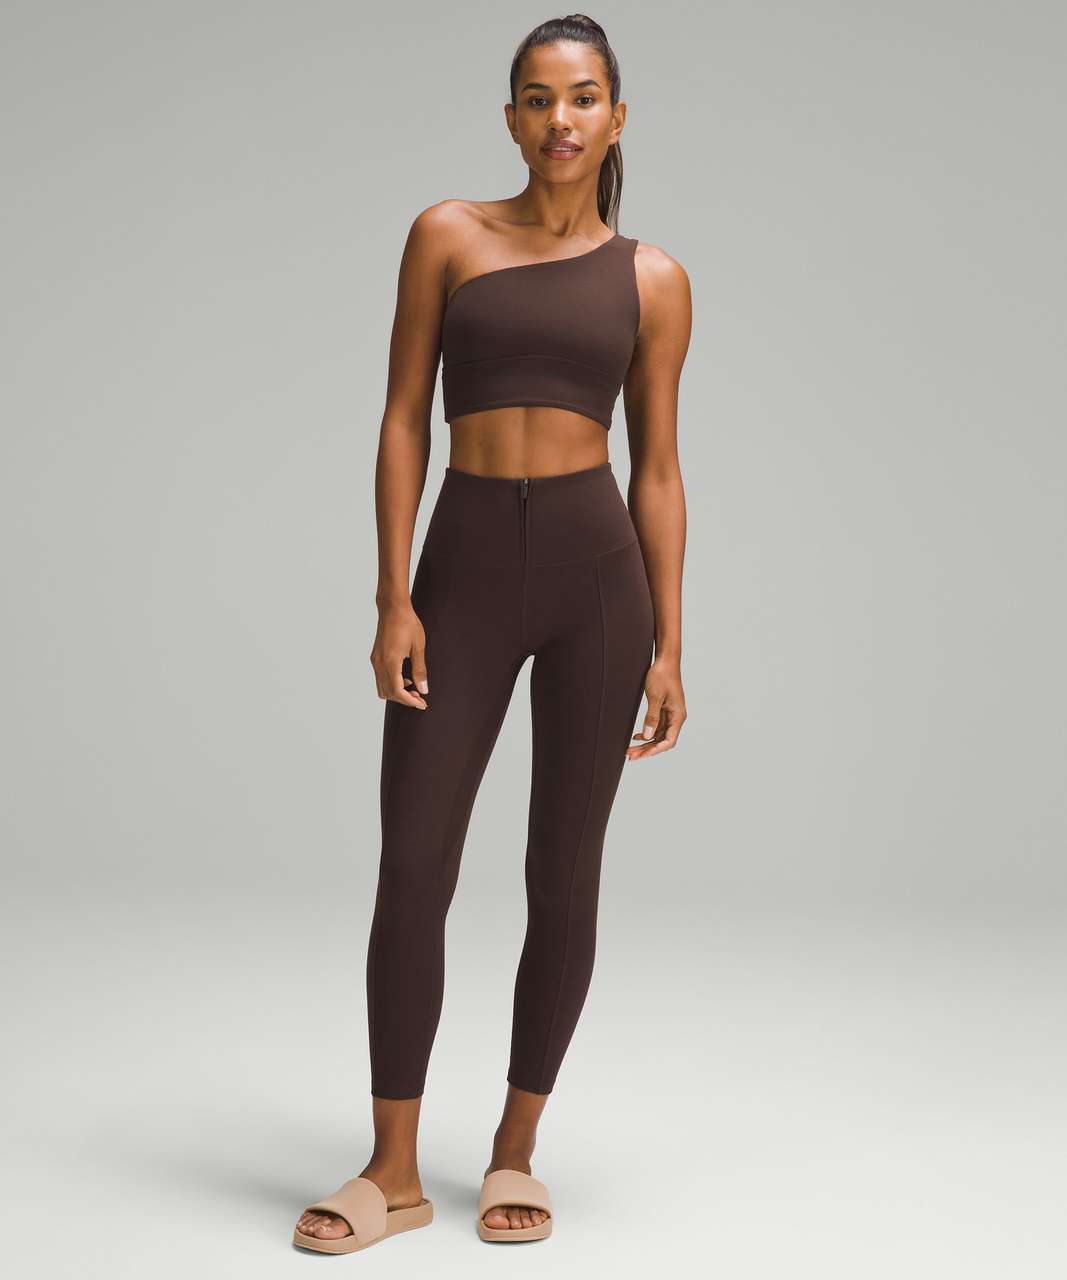 Lululemon Java Align HR 25” pant  Clothes design, Fashion tips, Pants